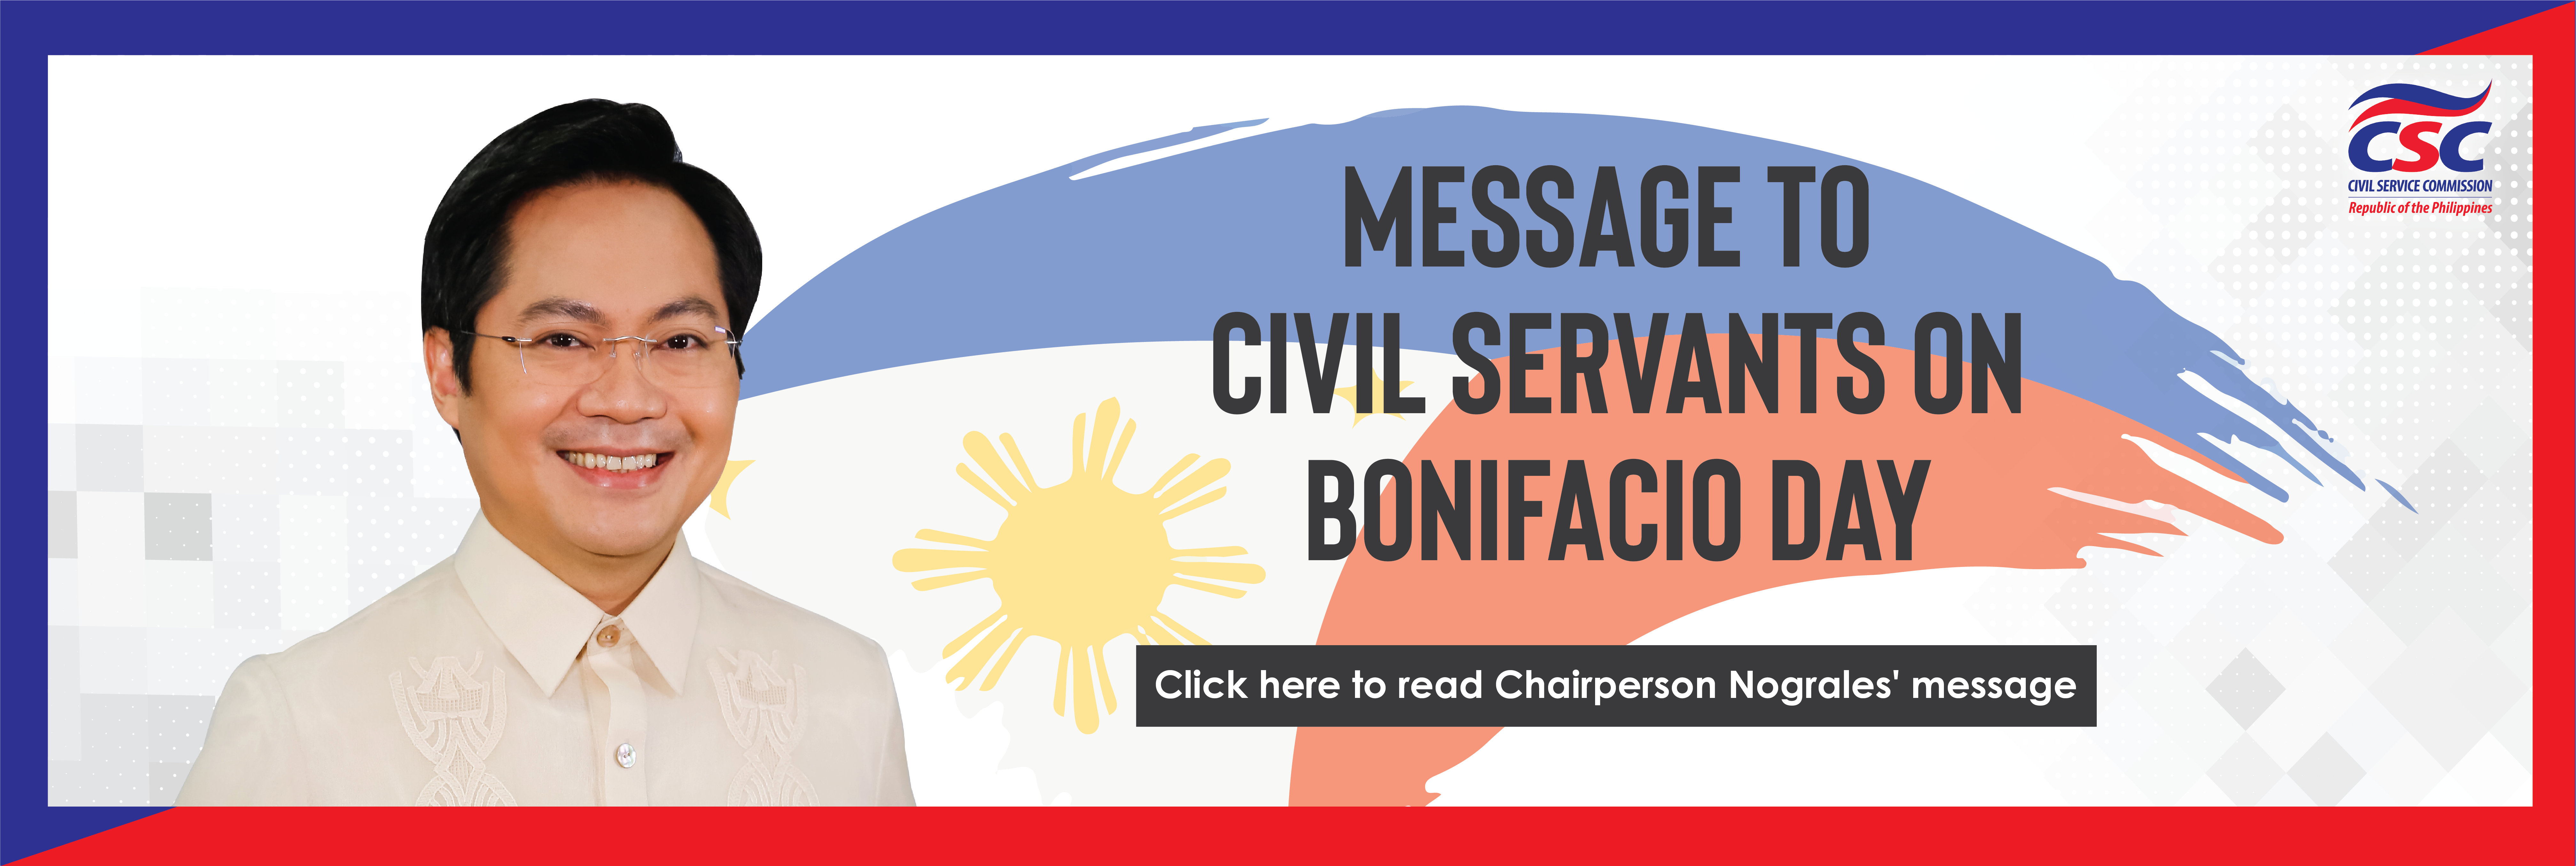 Bonifacio Day Message